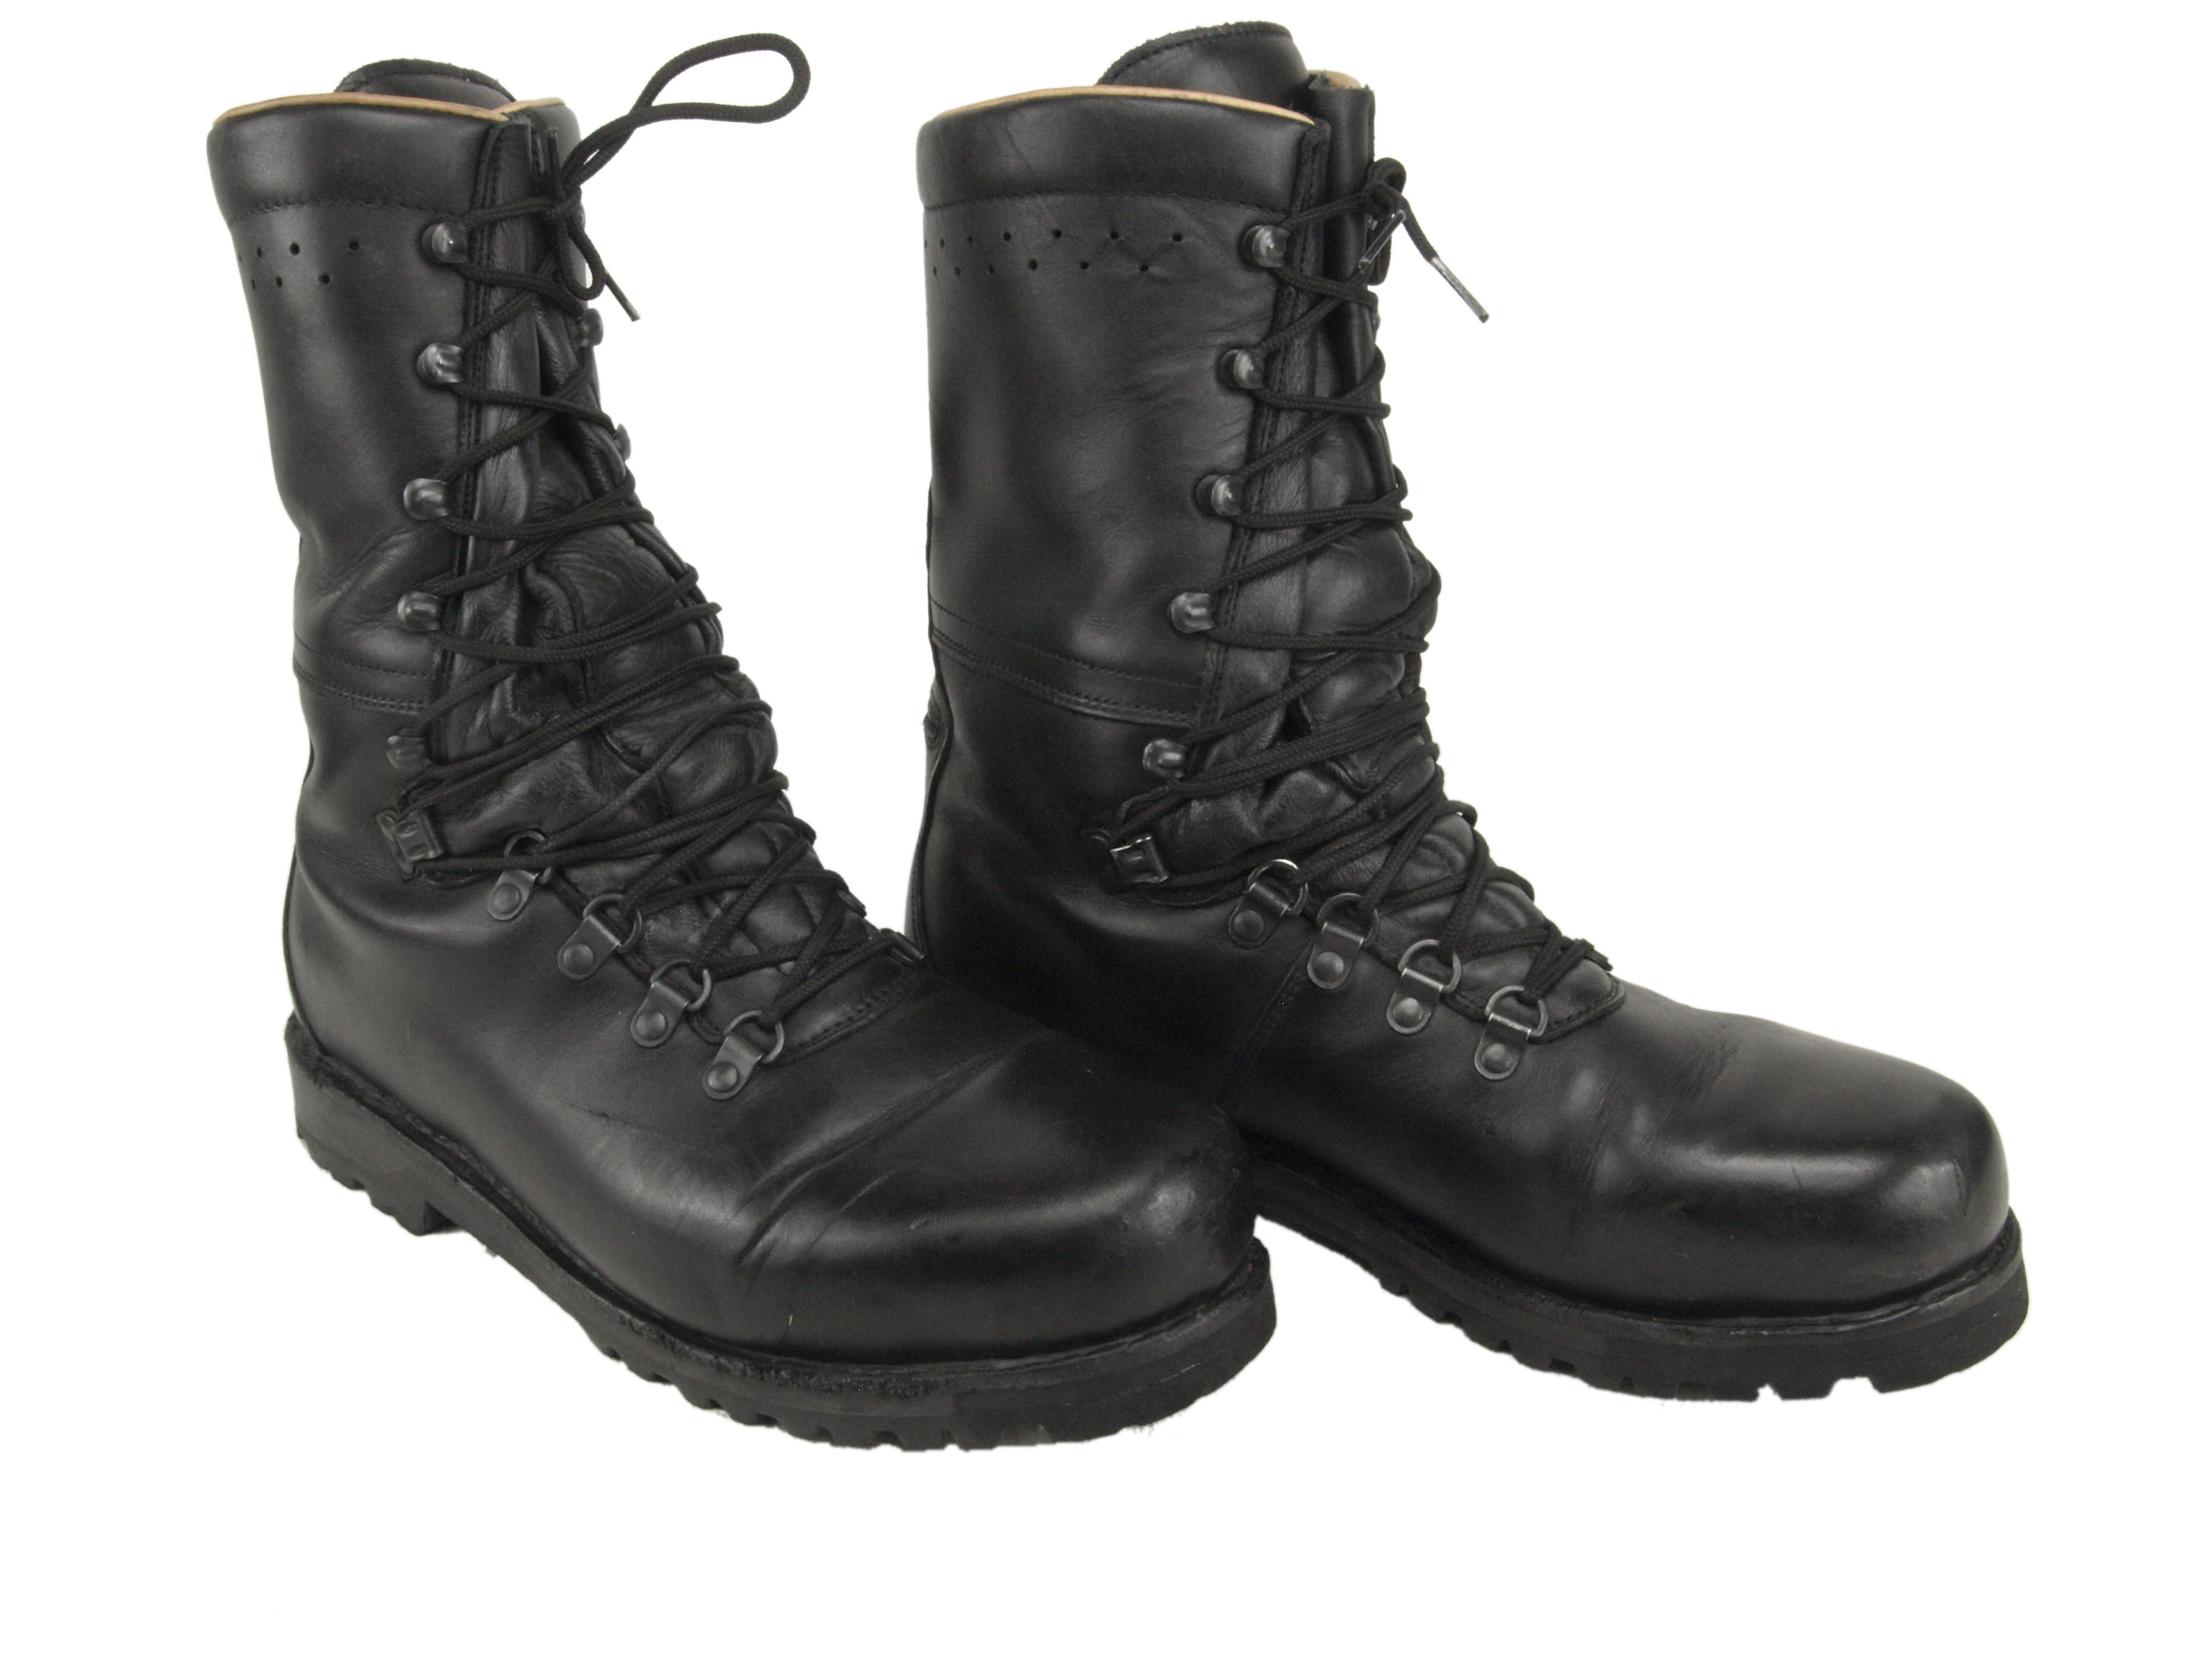 surplus combat boots